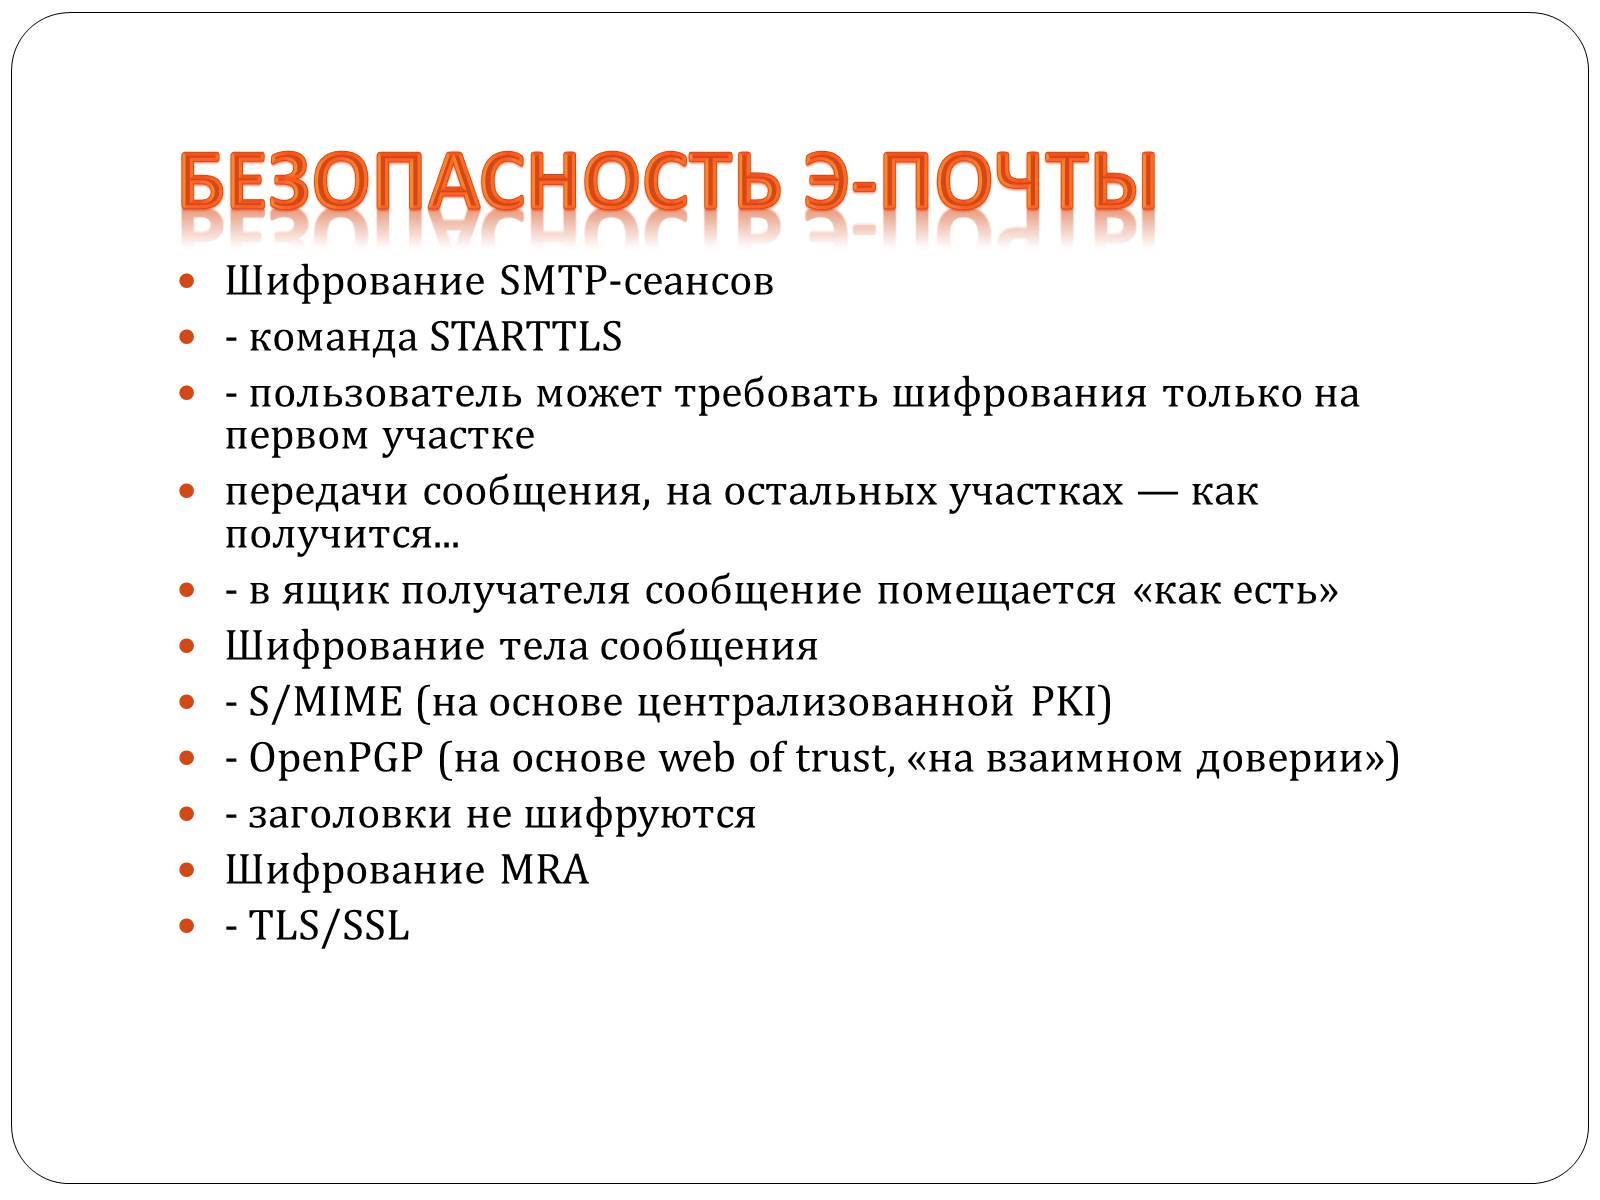 Презентація на тему «Протоколы елктронной почты» - Слайд #12